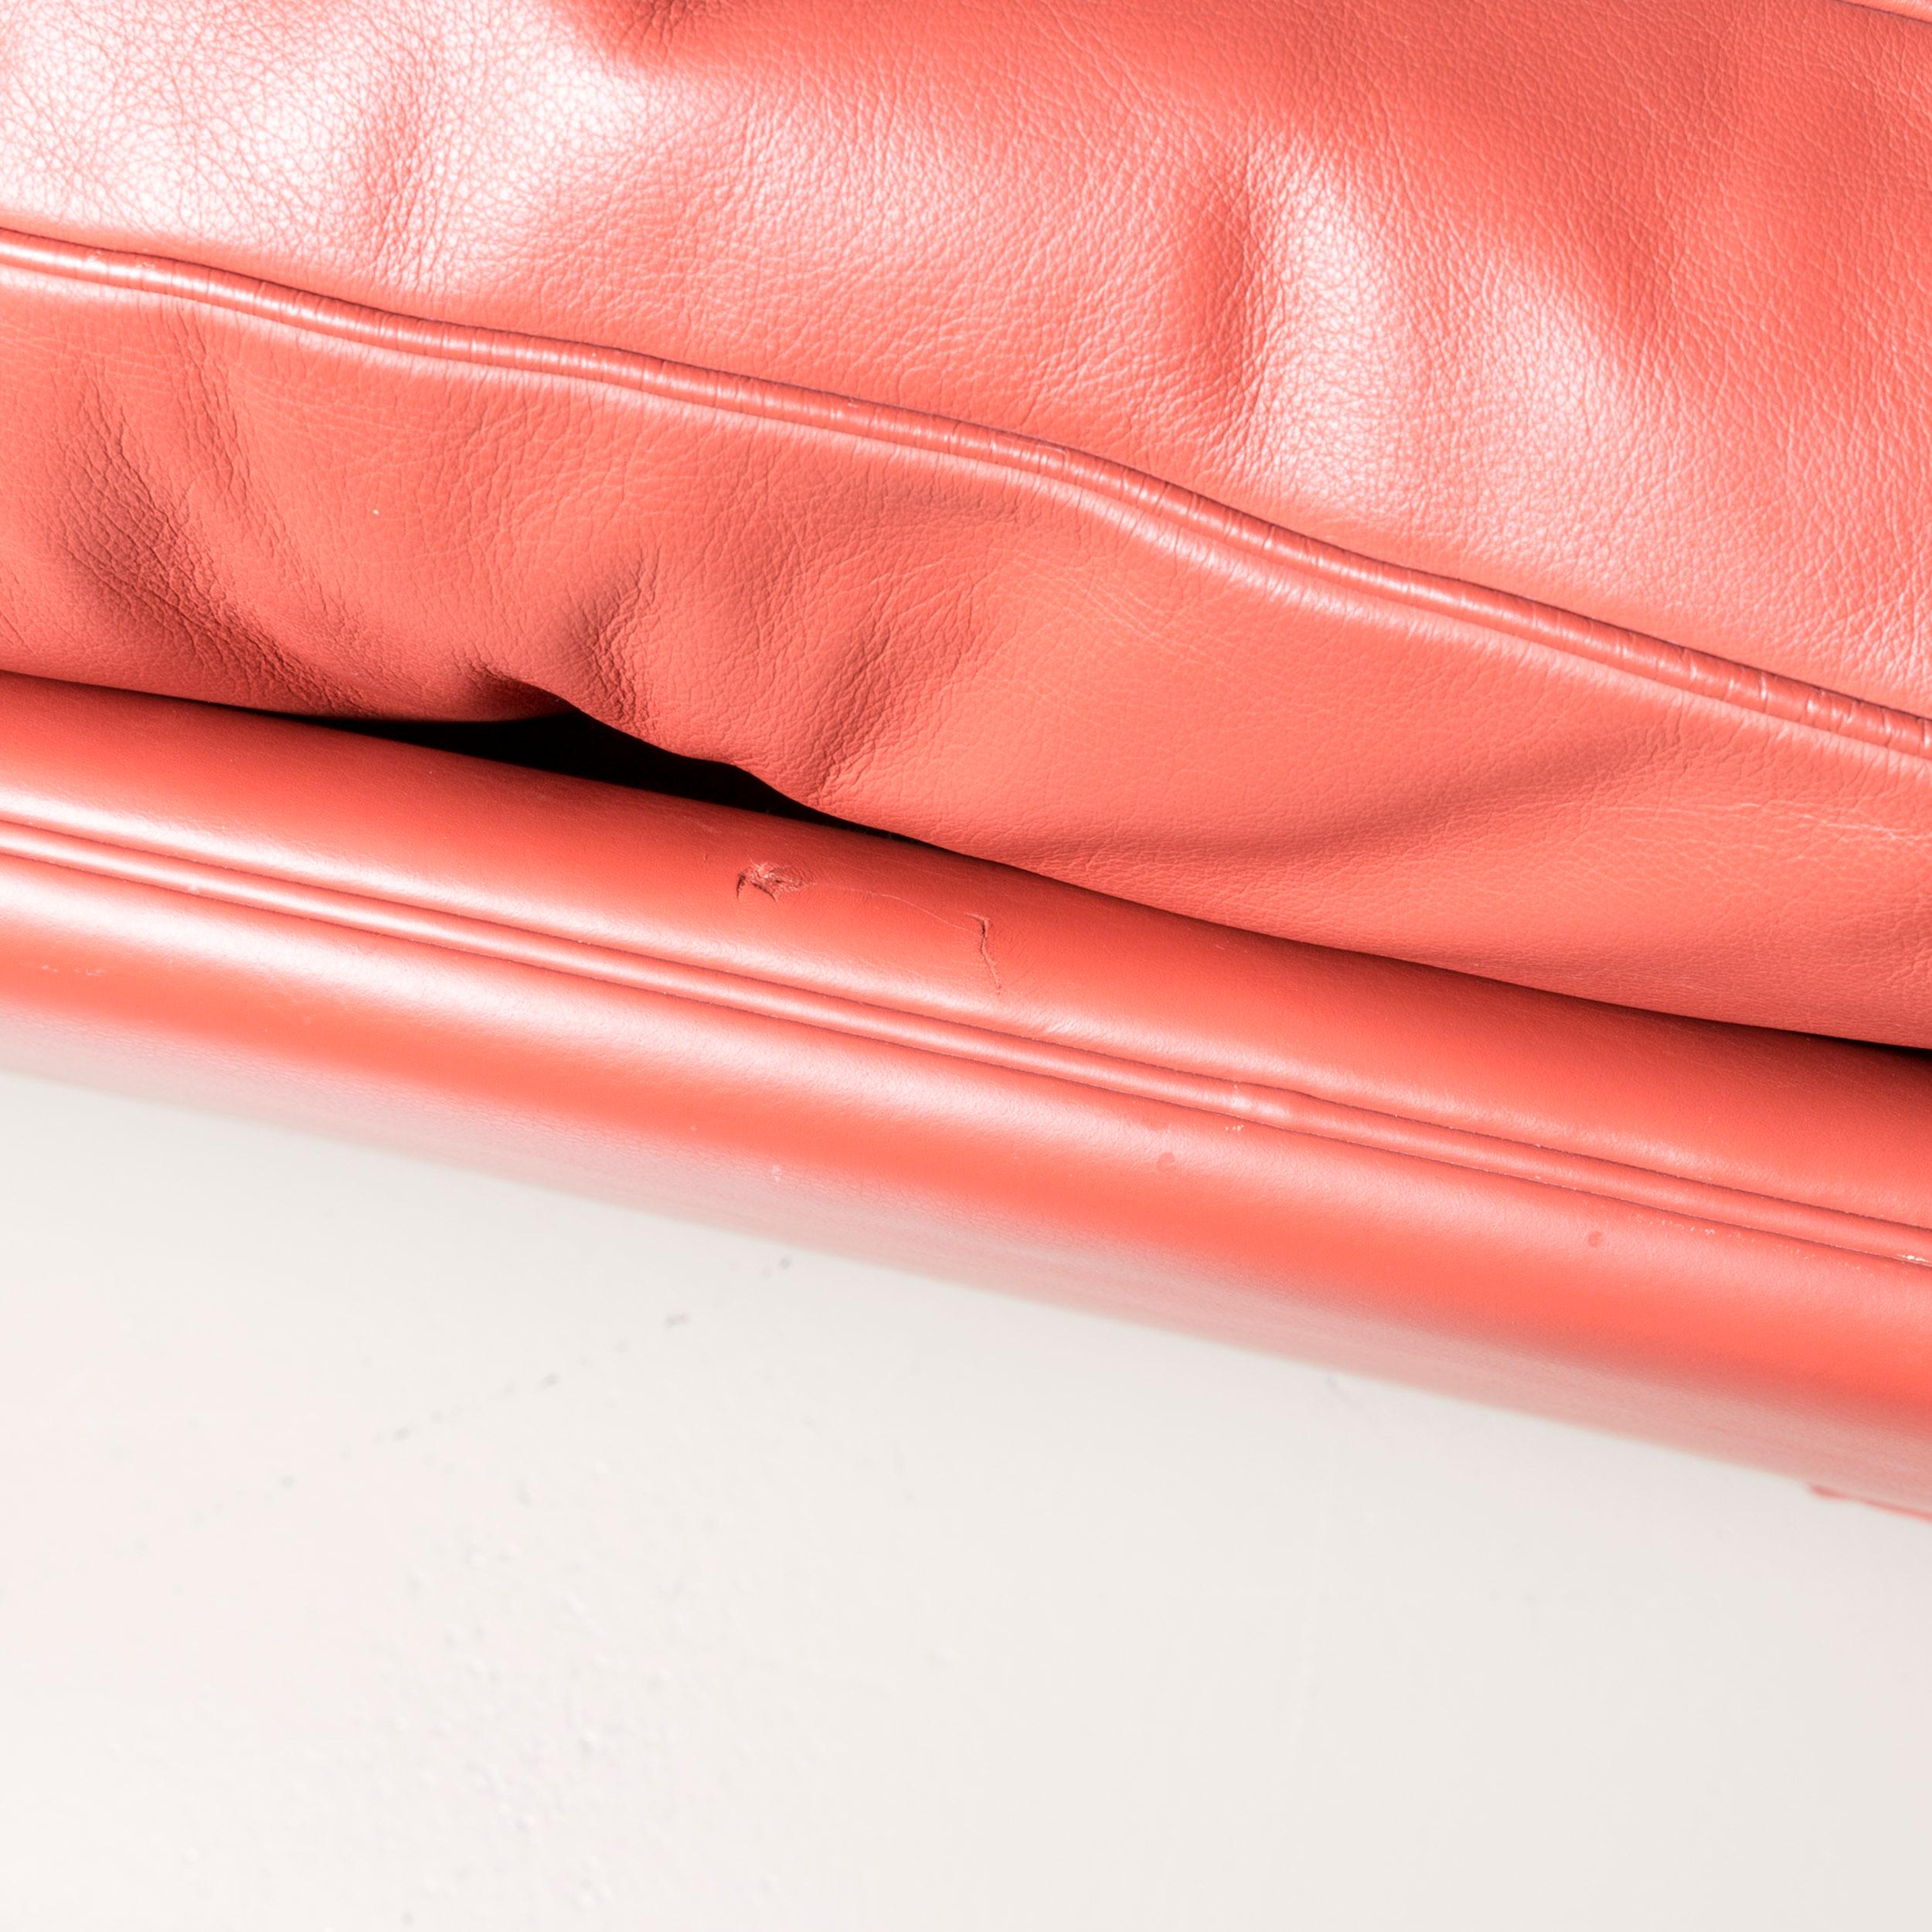 Poltrona Frau Dream on Designer Leather Two-Seat Couch Orange 4